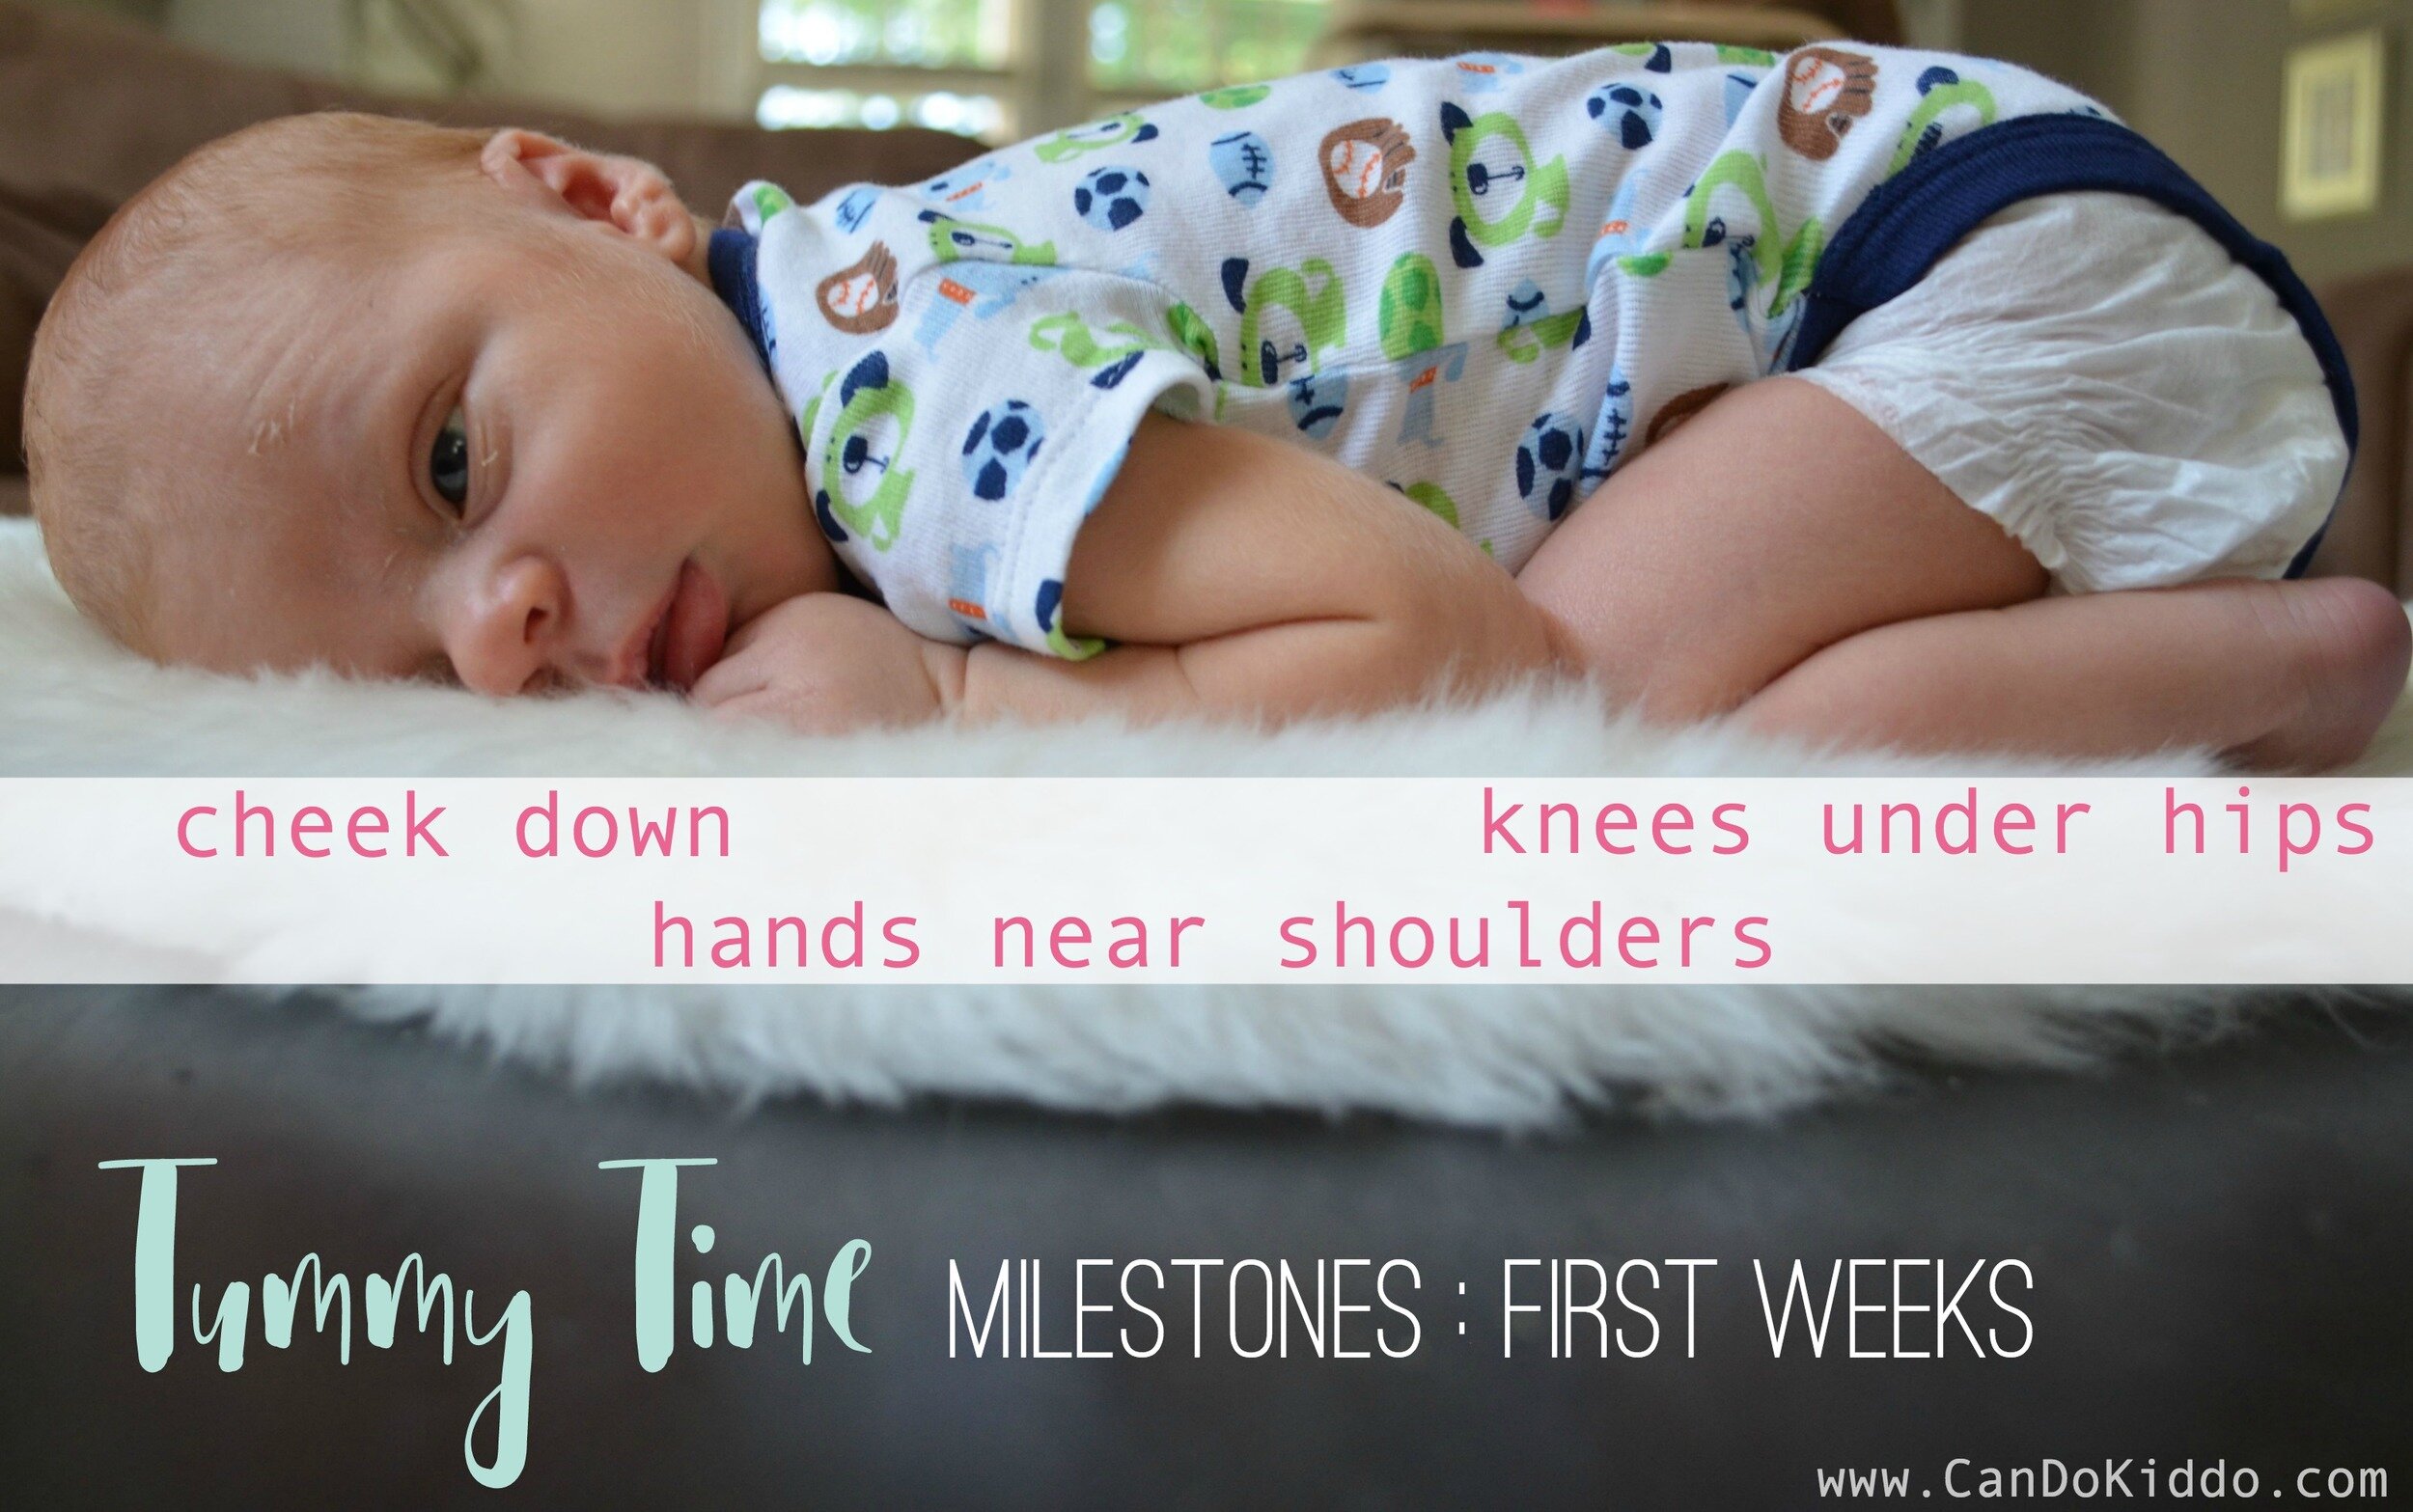 Newborn tummy time: When should babies start tummy time?